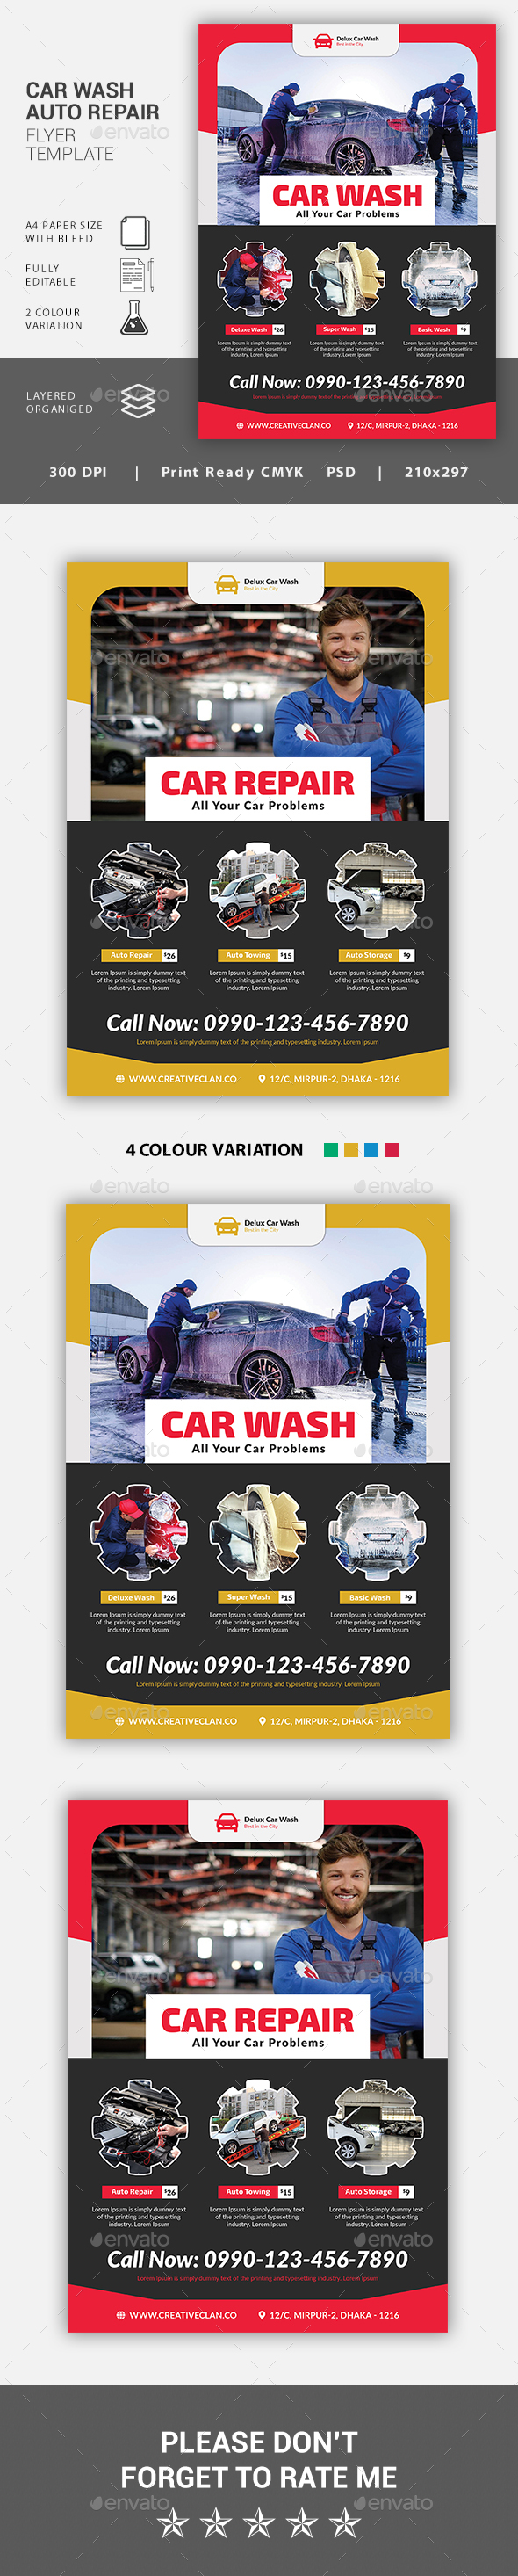 Car Wash Auto Repair Flyer